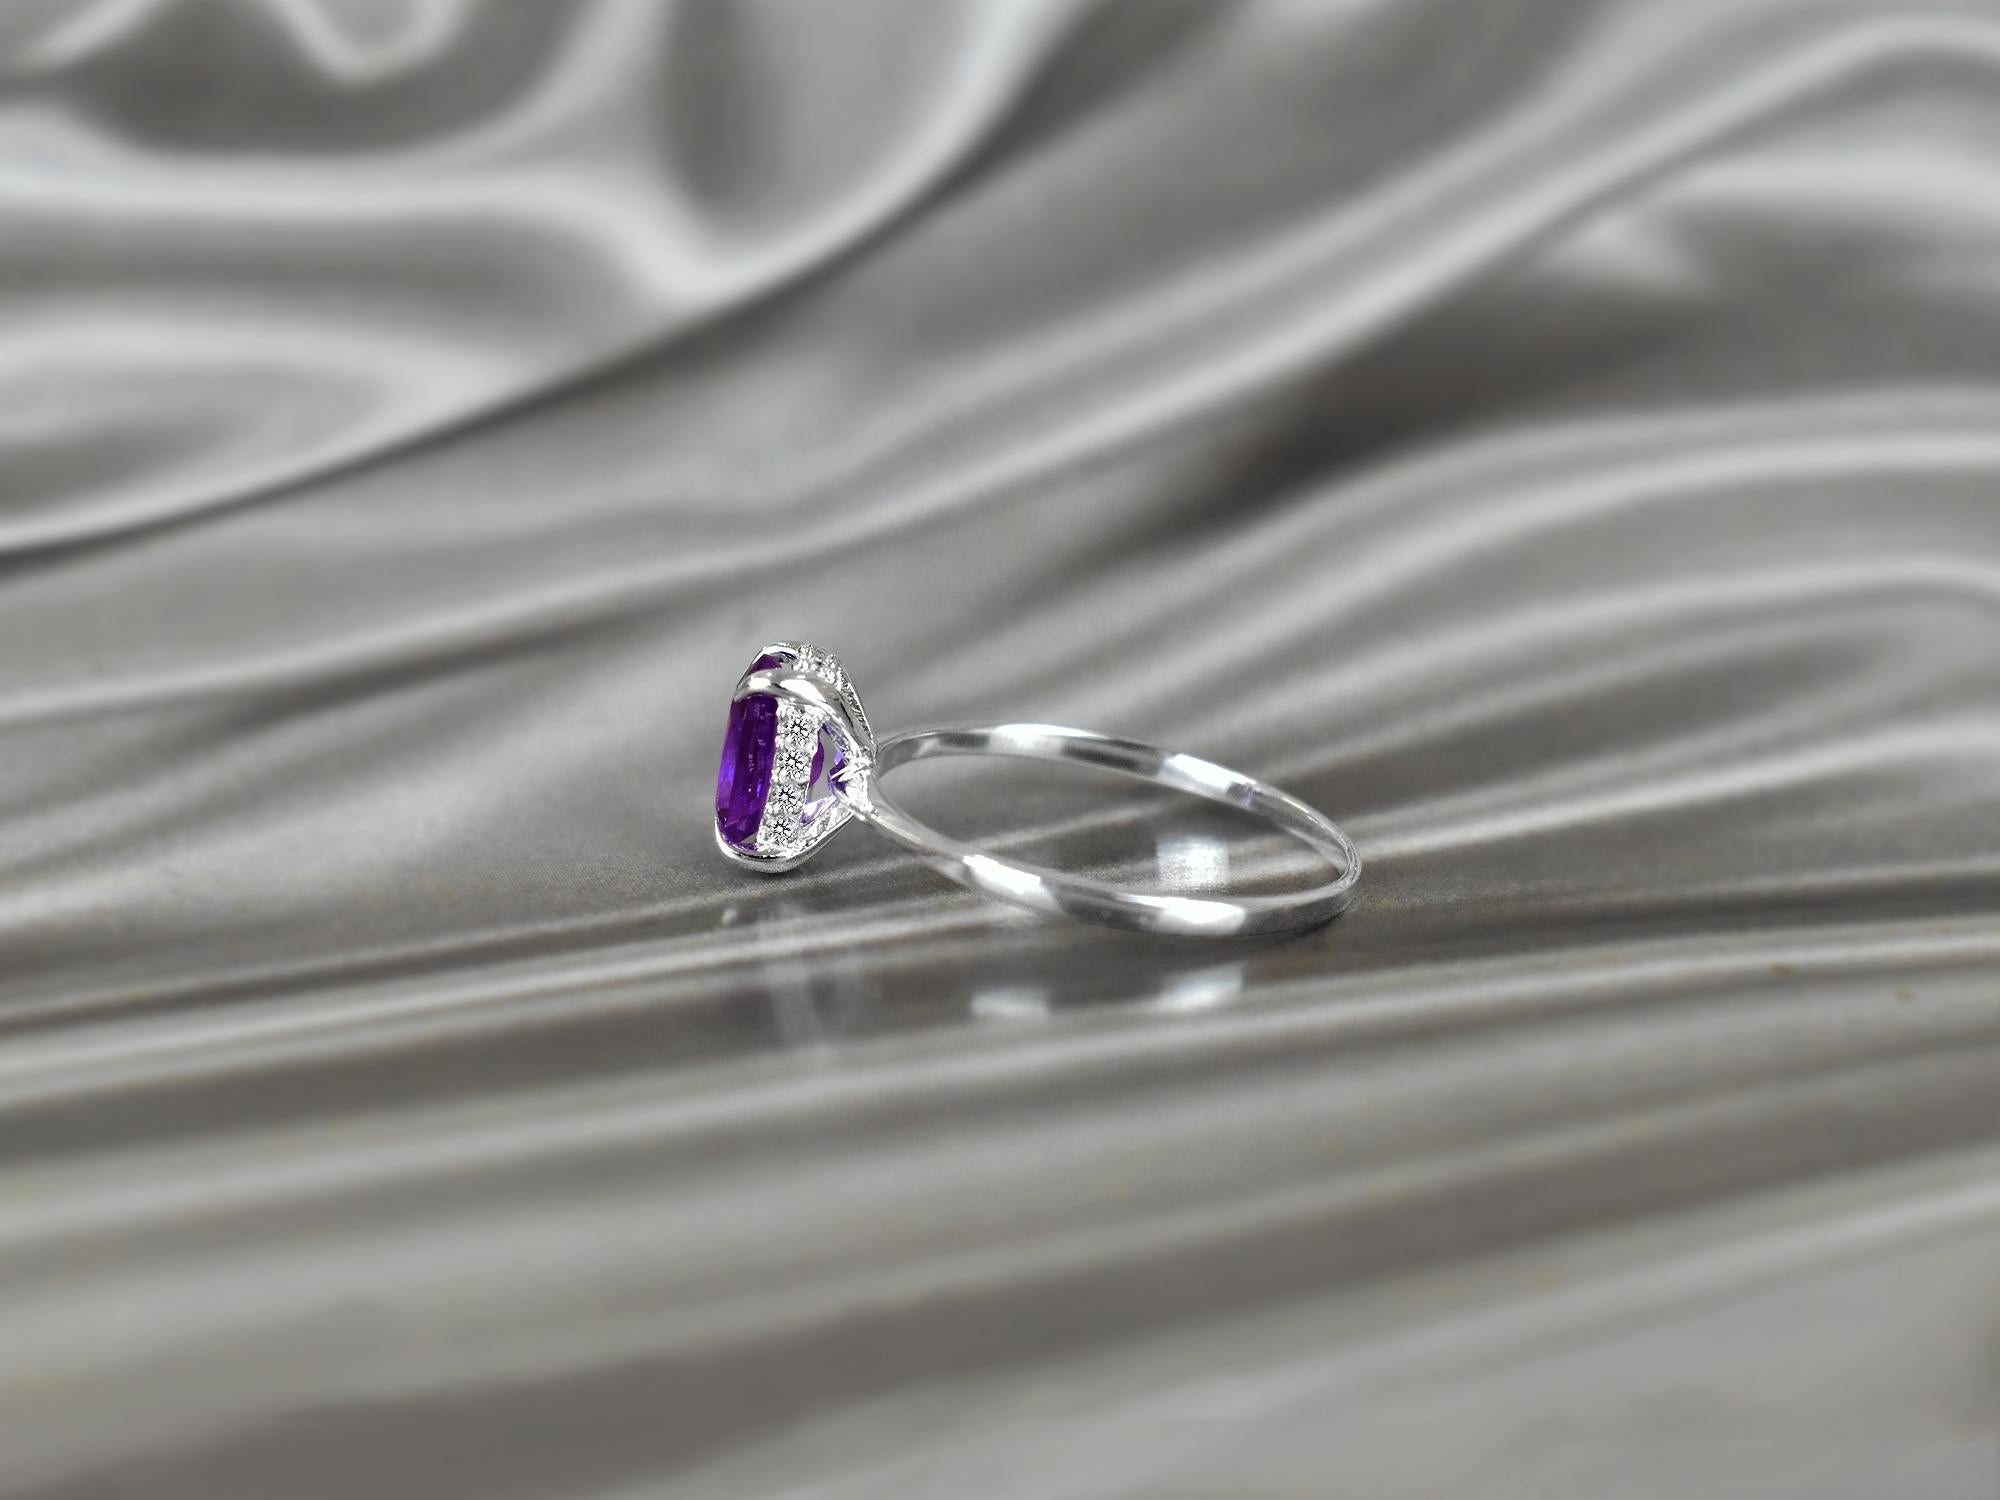 For Sale:  10k Gold Oval Gemstone 8x6 mm Oval Cut Gemstone Ring Gemstone Engagement Ring 10